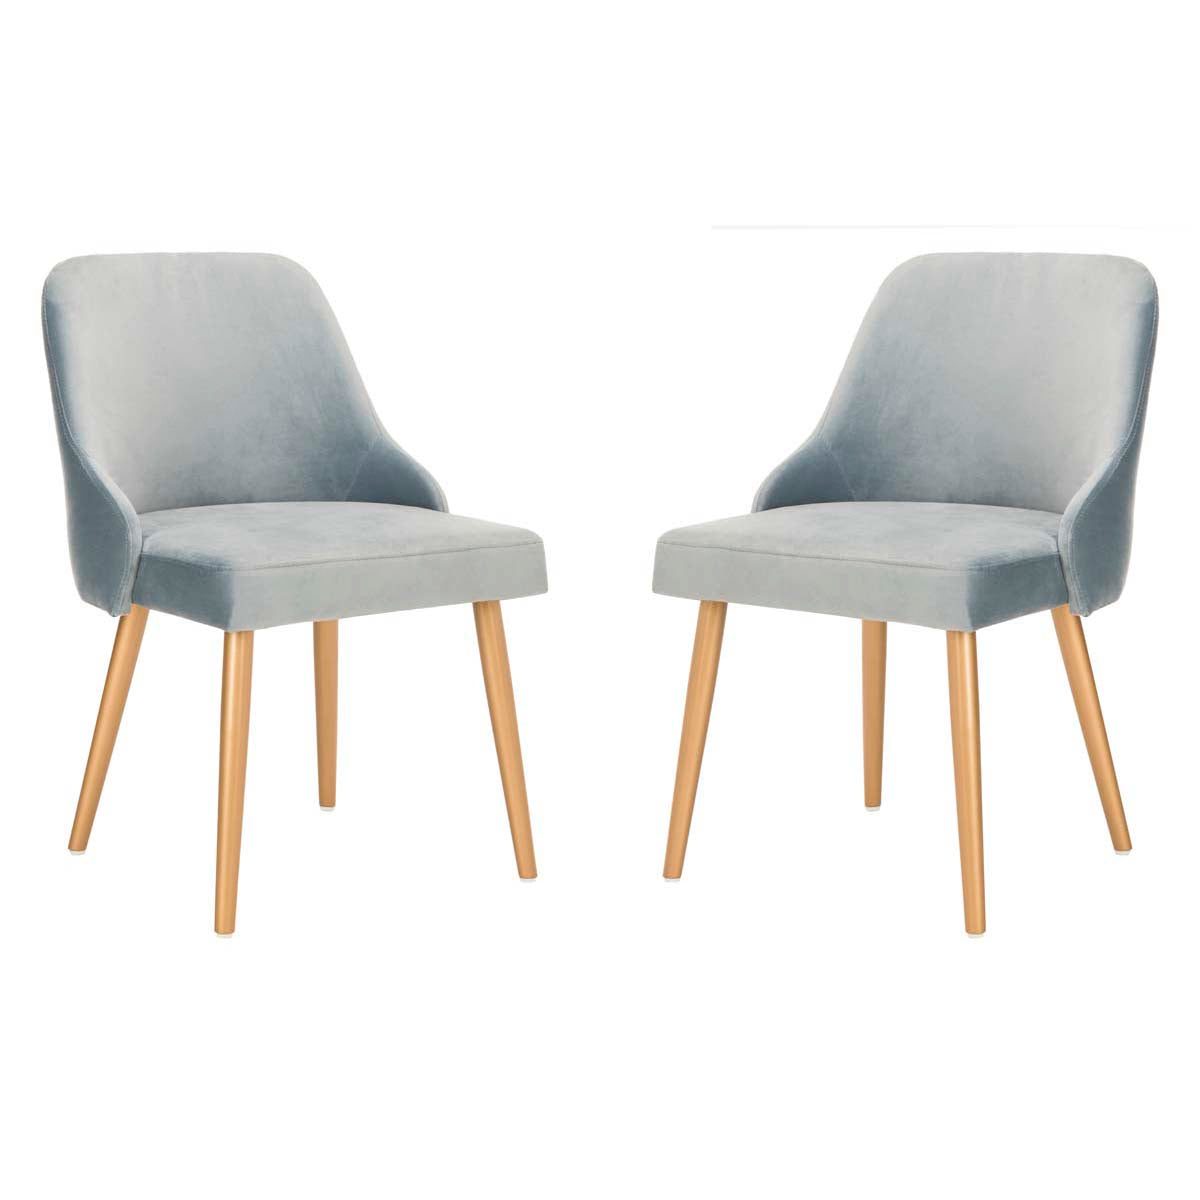 Safavieh Lulu Upholstered Dining Chair, DCH6200 - Slate Blue/Gold (Set of 2)